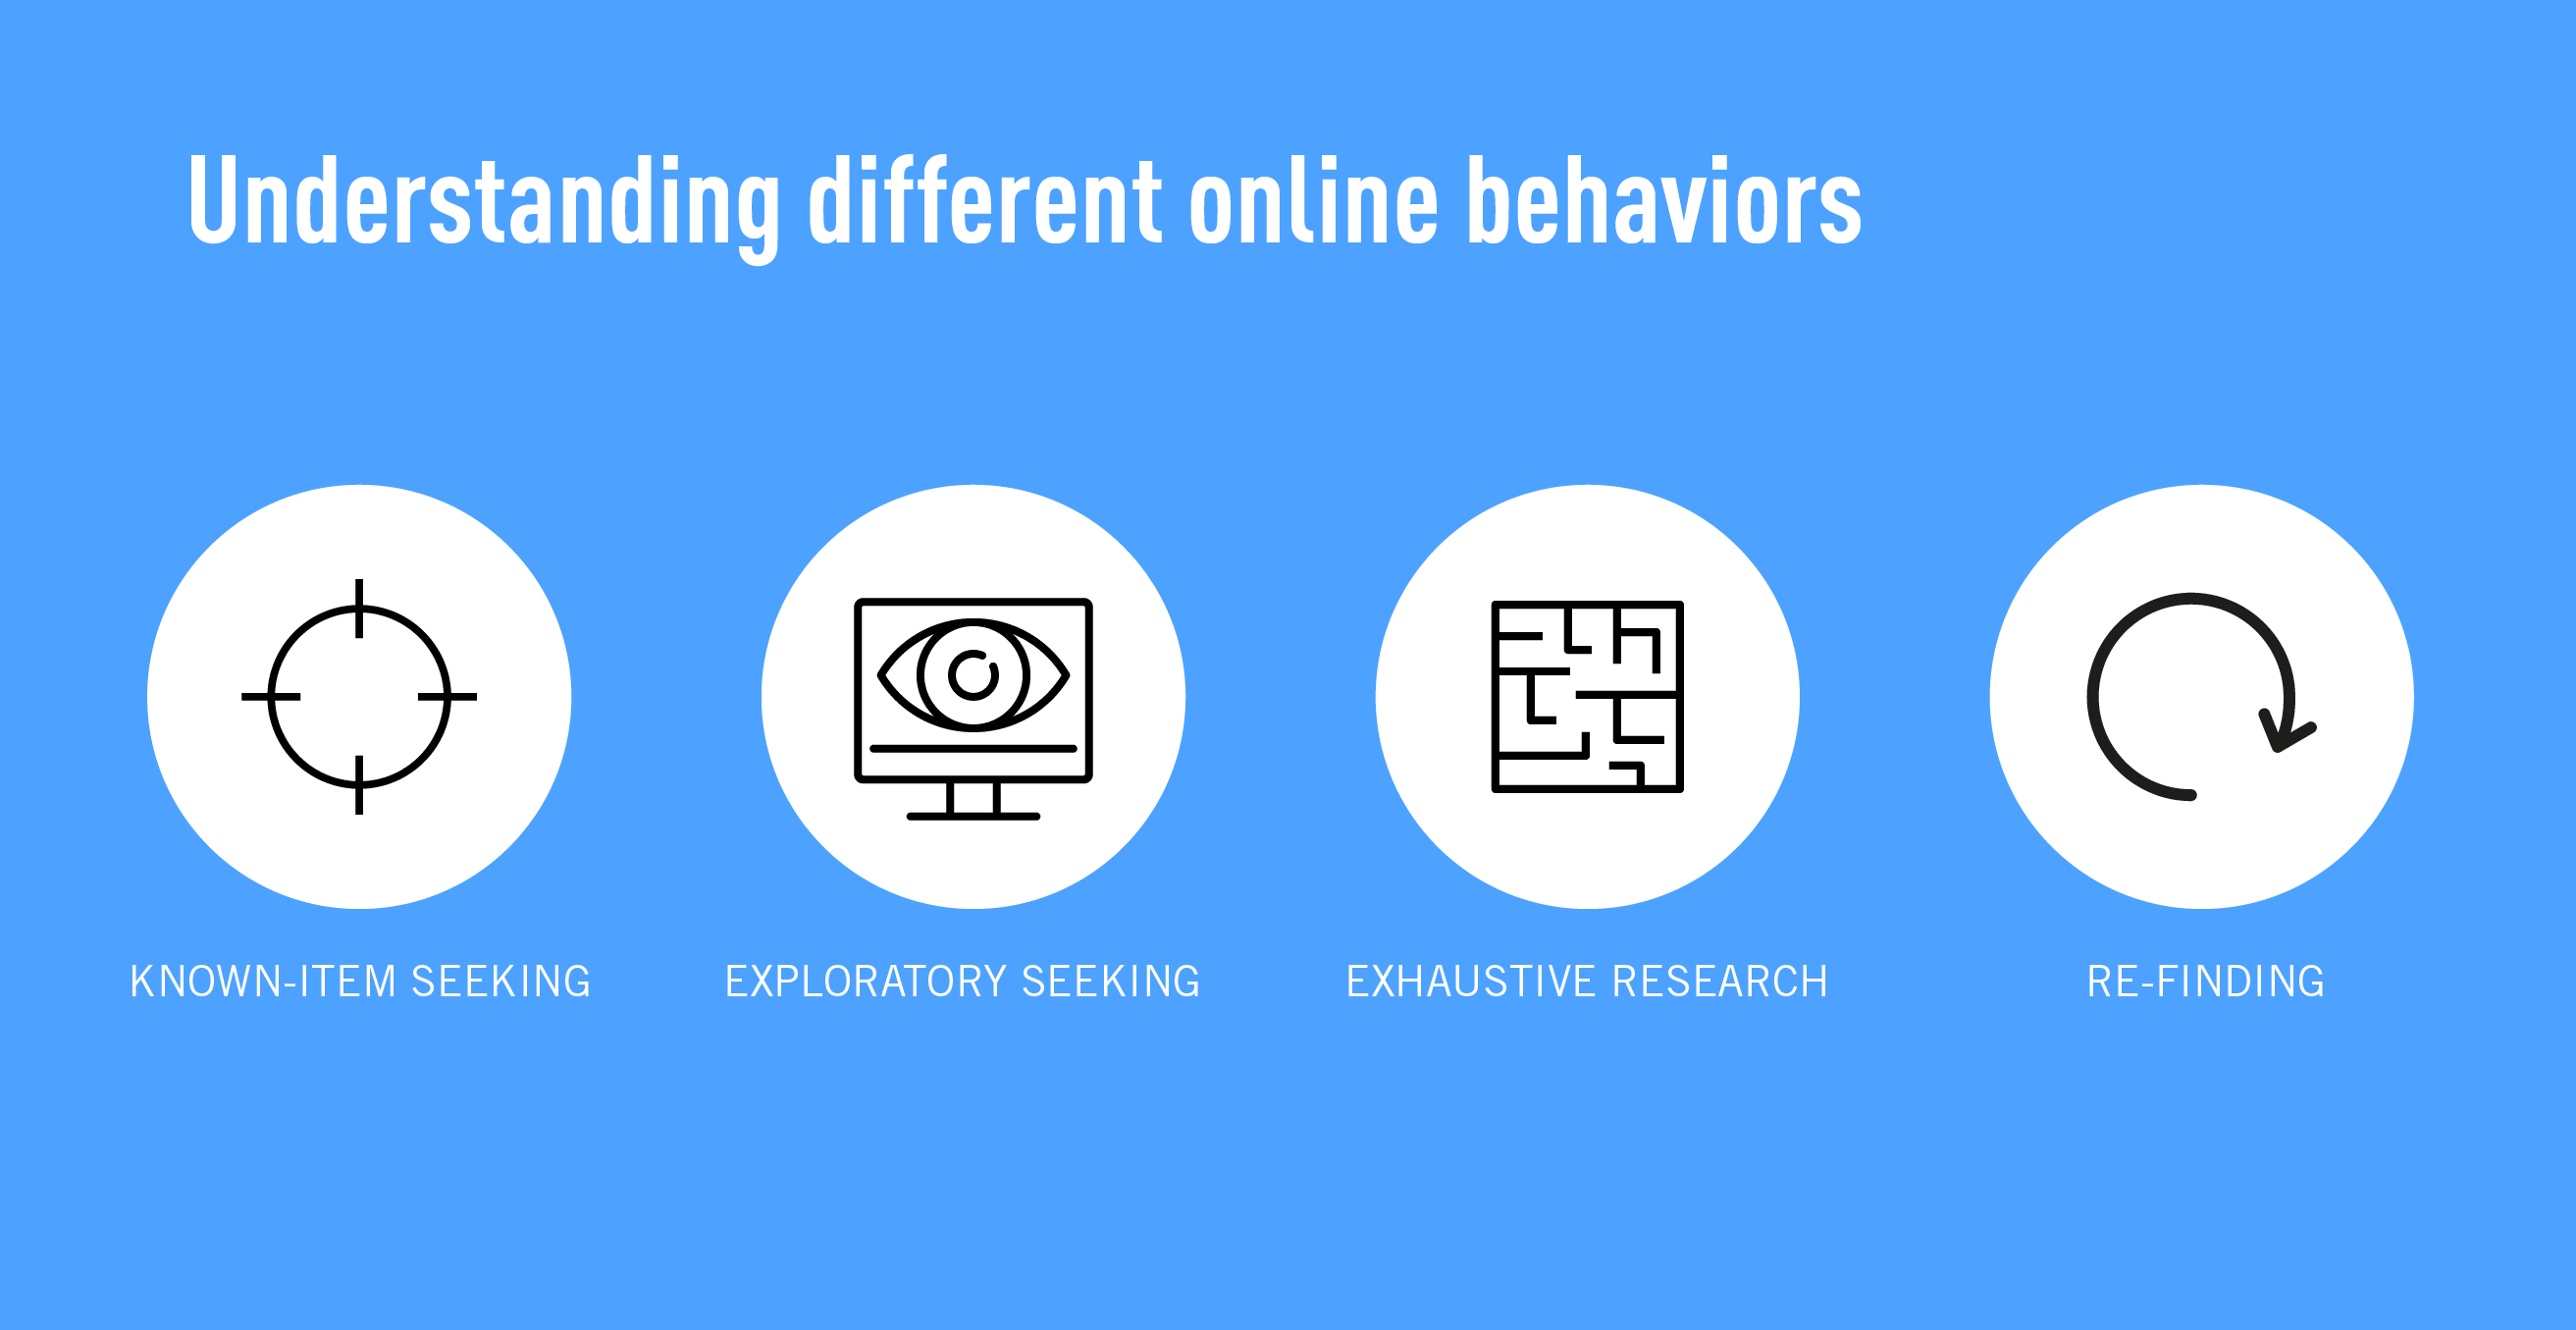 How to understand different online behaviors through information architecture